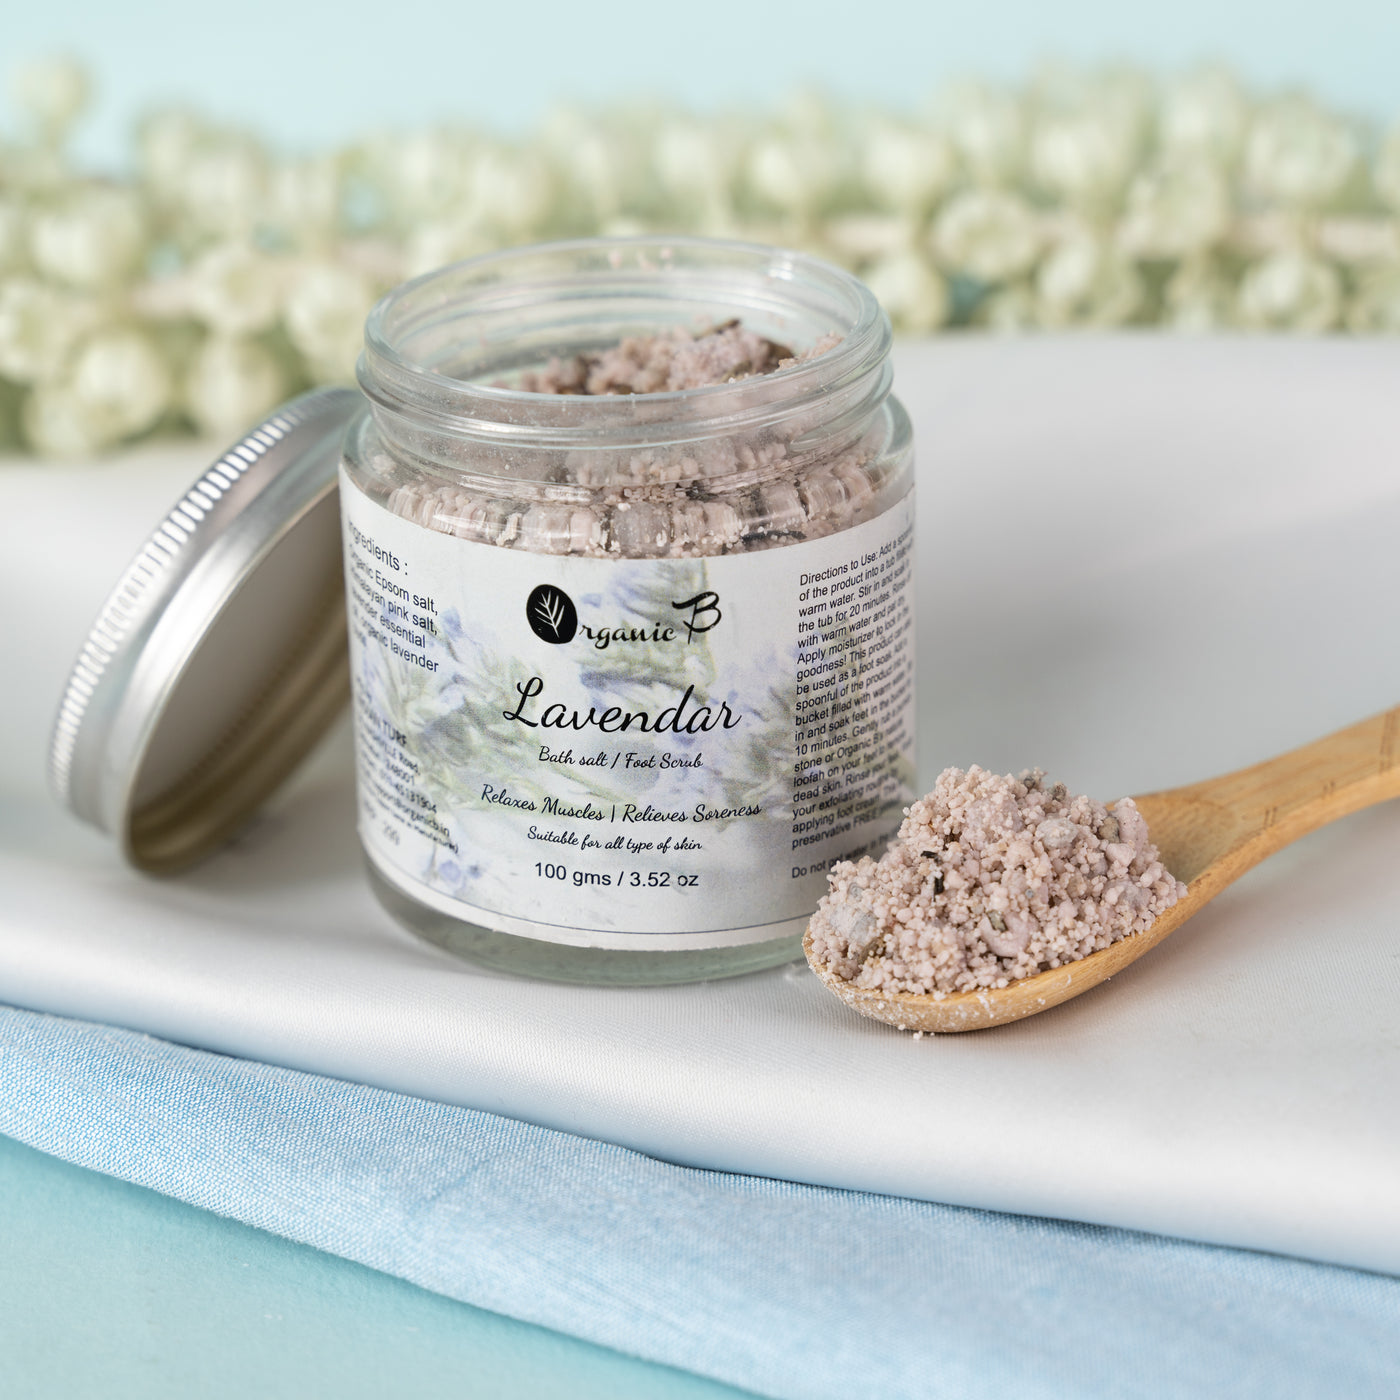 Organic B lavender bath salt